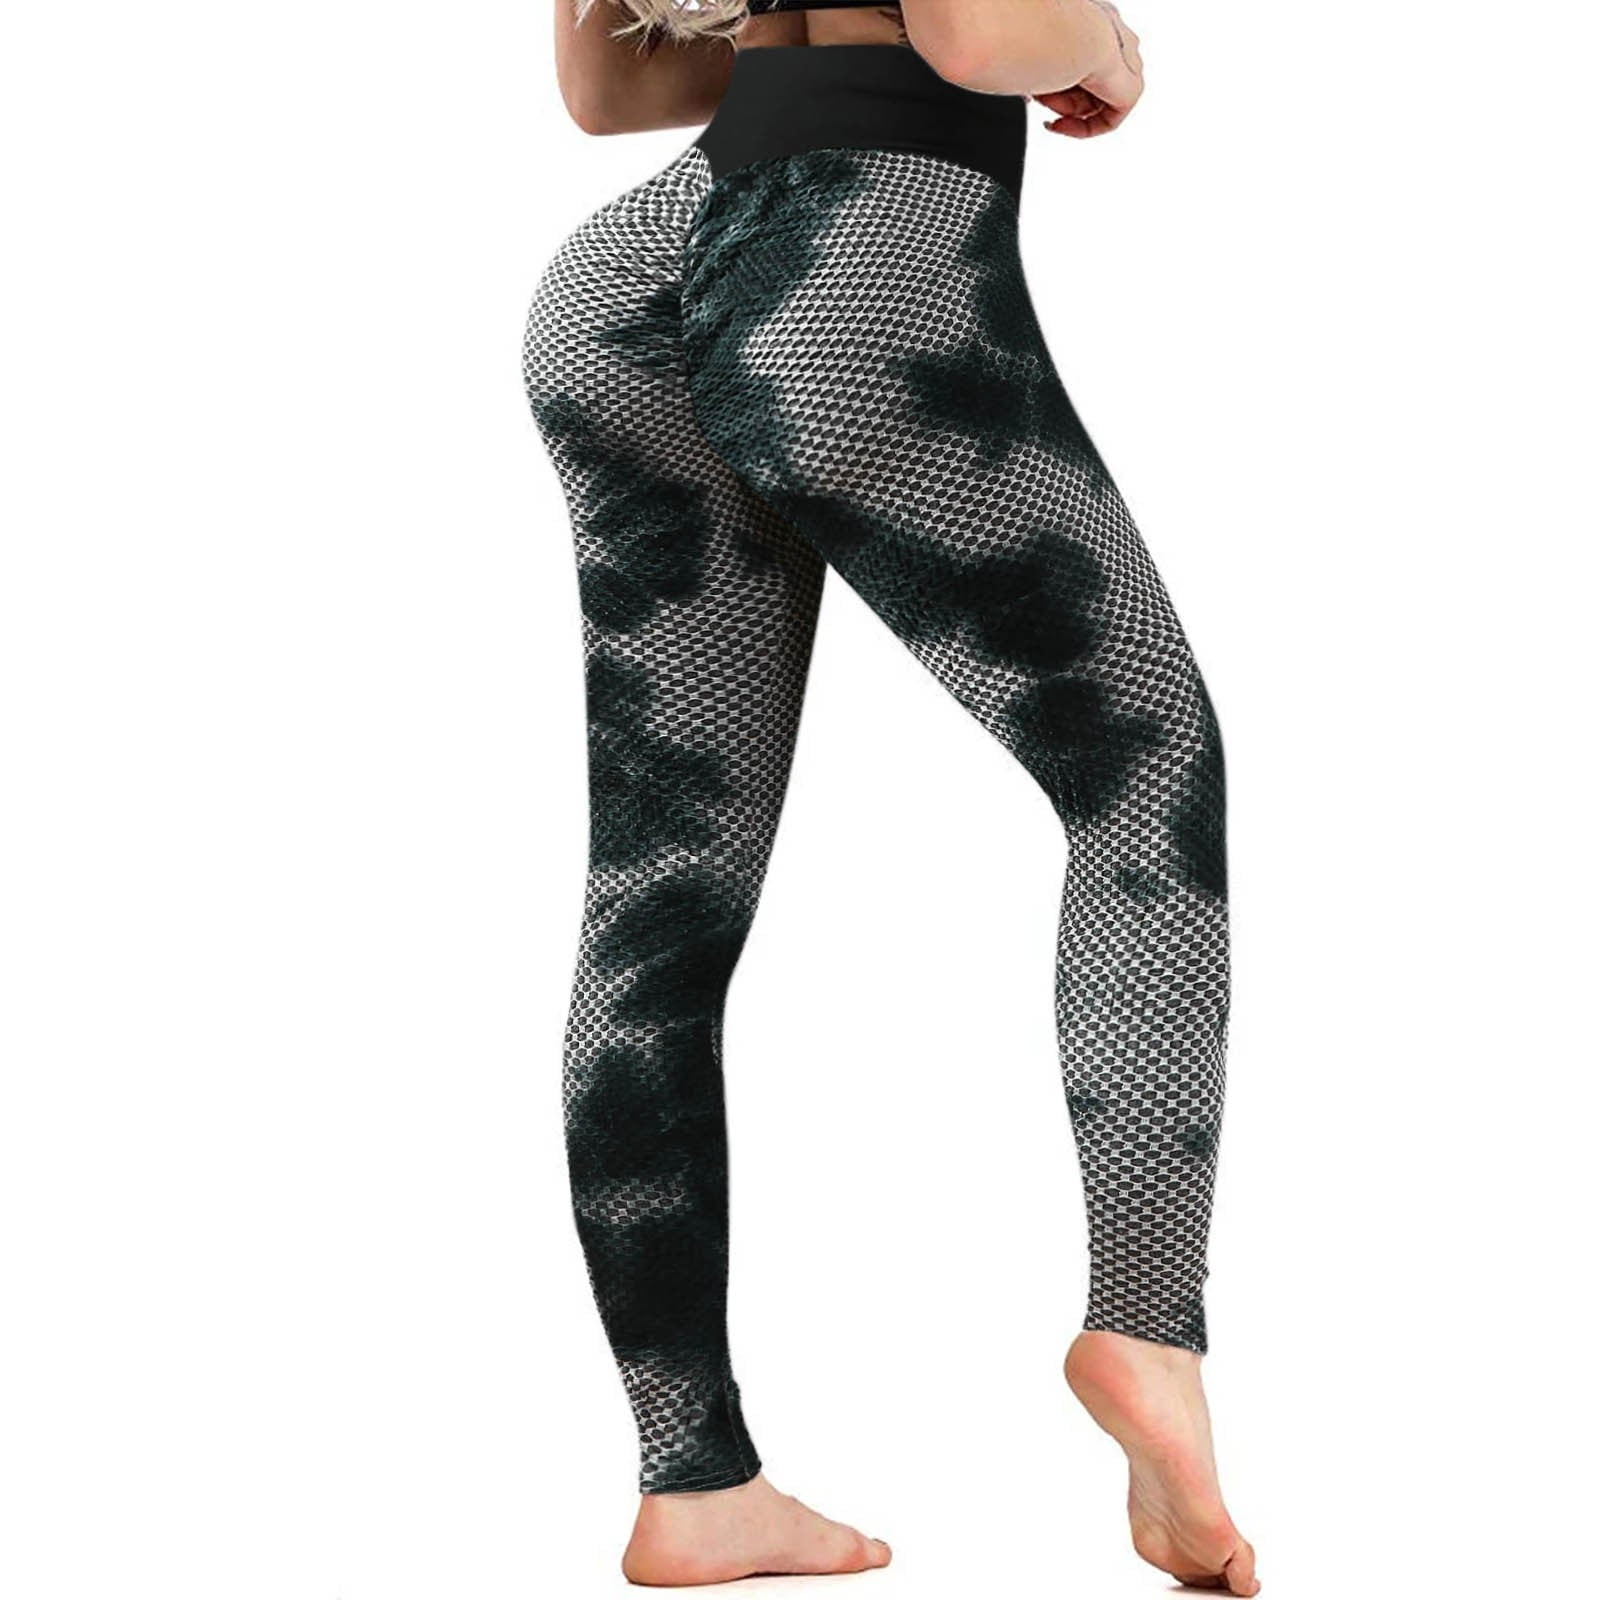 nsendm Unisex Pants Adult Yoga Pants Butt Lift Women's Tight Sexy High  Waist Running Bodybuilding Maternity Yoga Pants over The Belly plus(Grey, XL)  